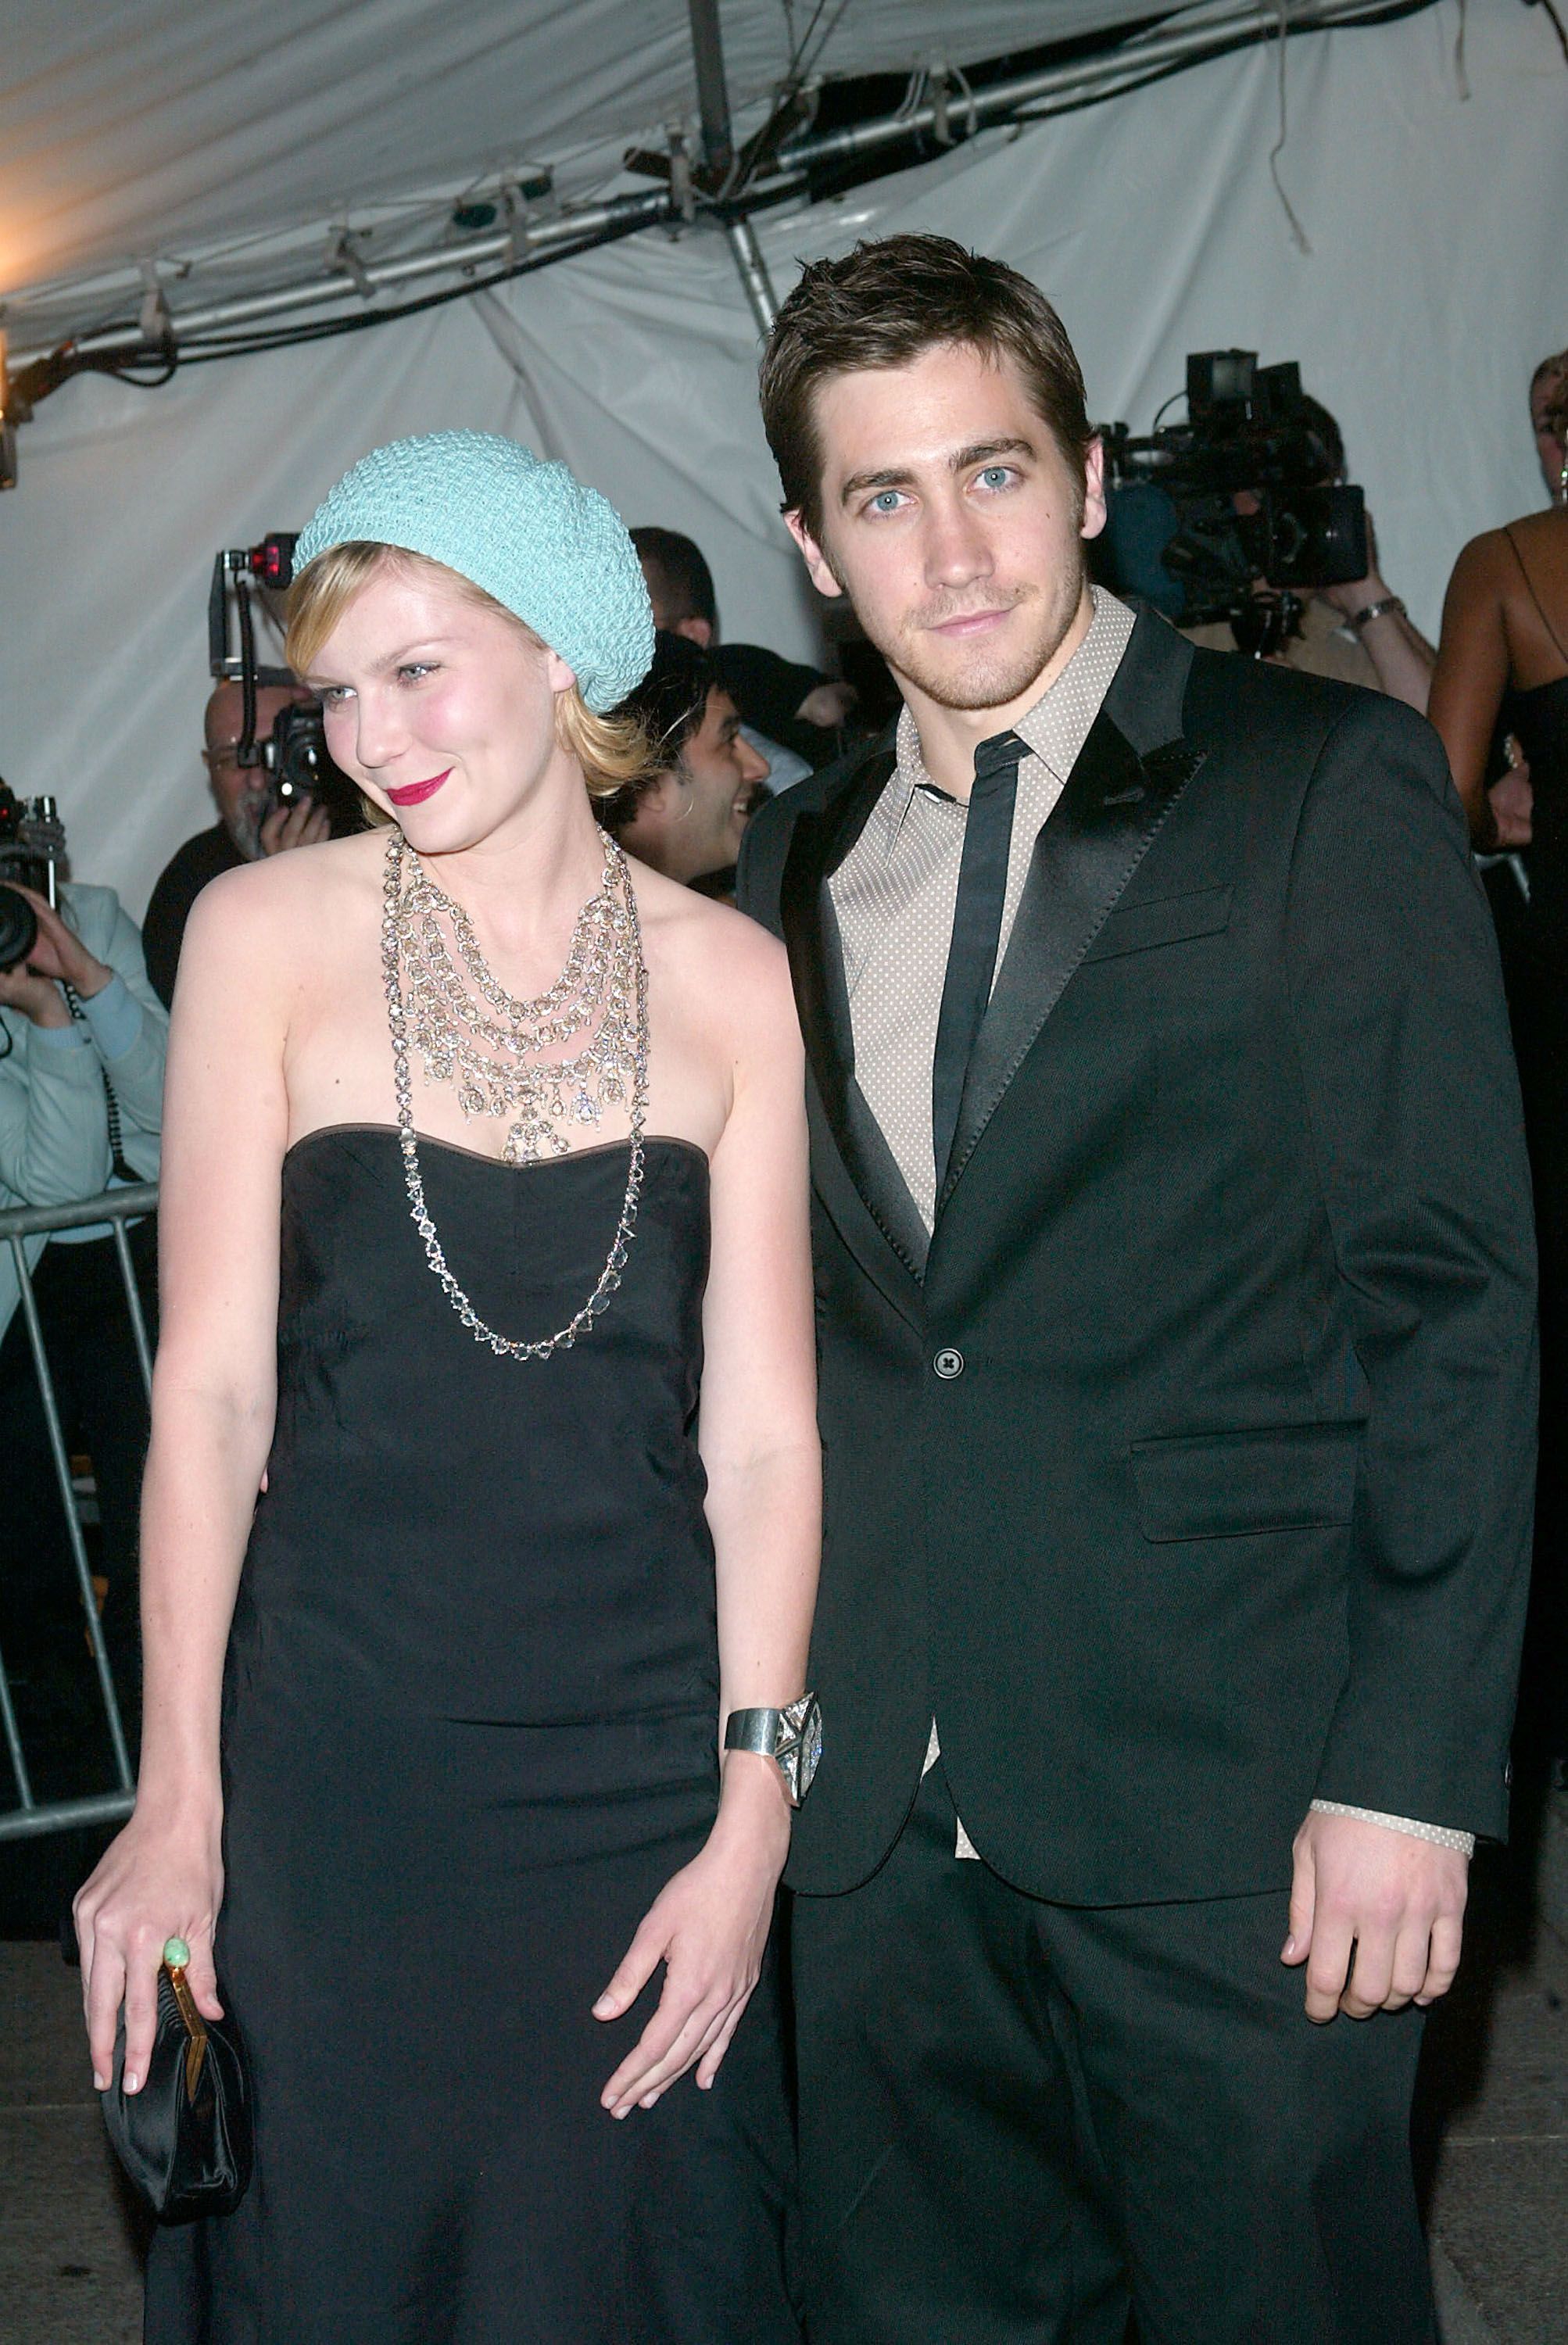  Kirsten Dunst and Jake Gyllenhaal at the MET Gala in 2003 | Source: Getty Images